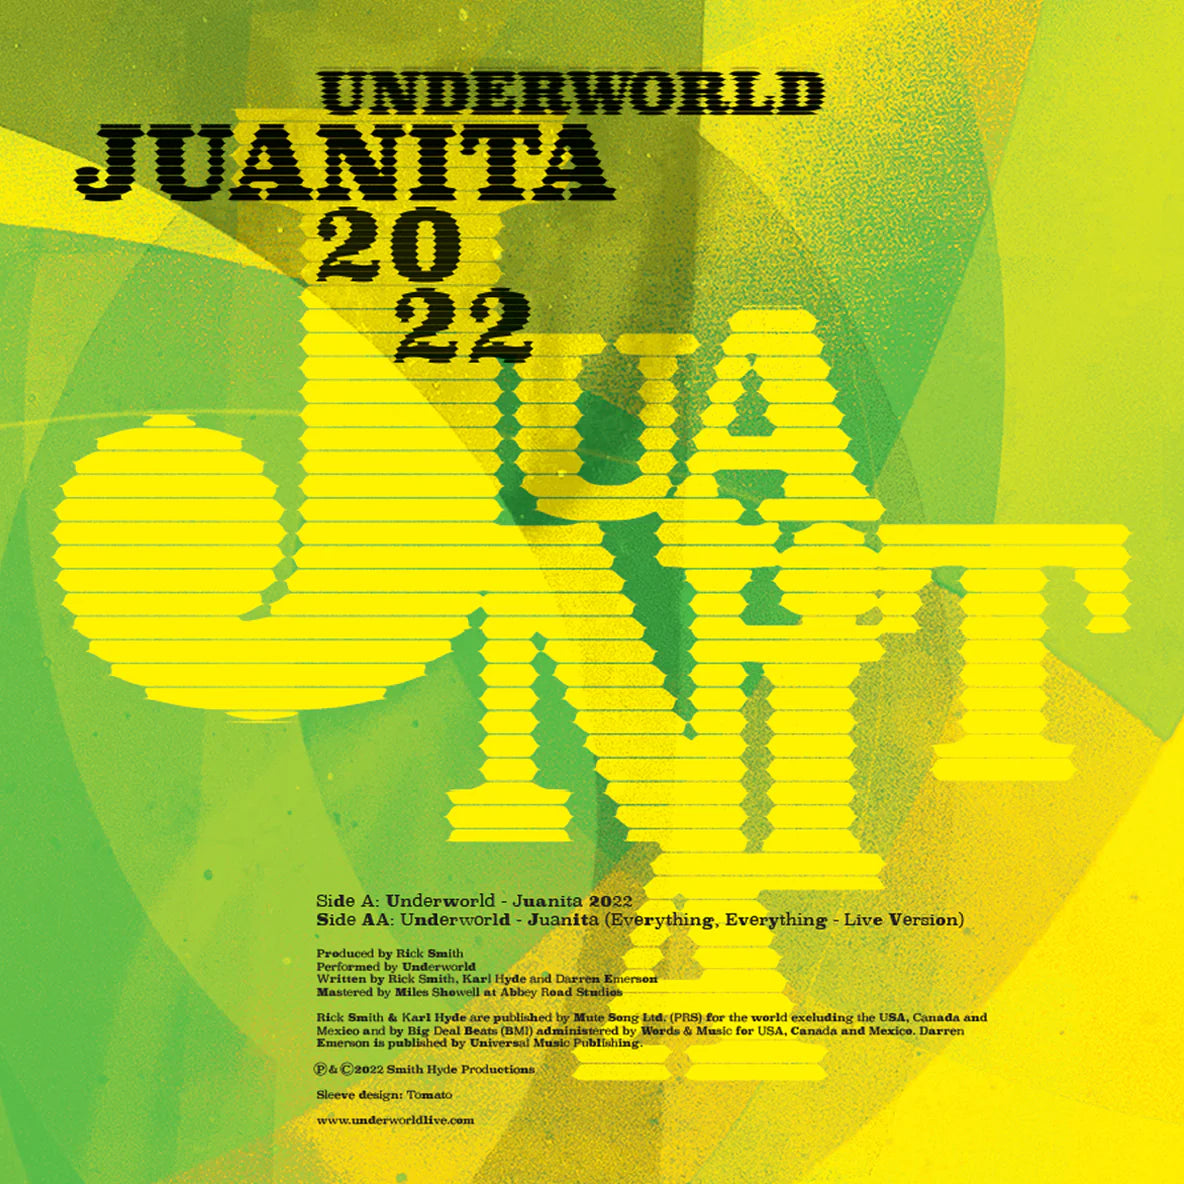 Underworld - *JUANITA LIMITED DROP* 'JUANITA 2022' HEAVY-WEIGHT 12" VINYL